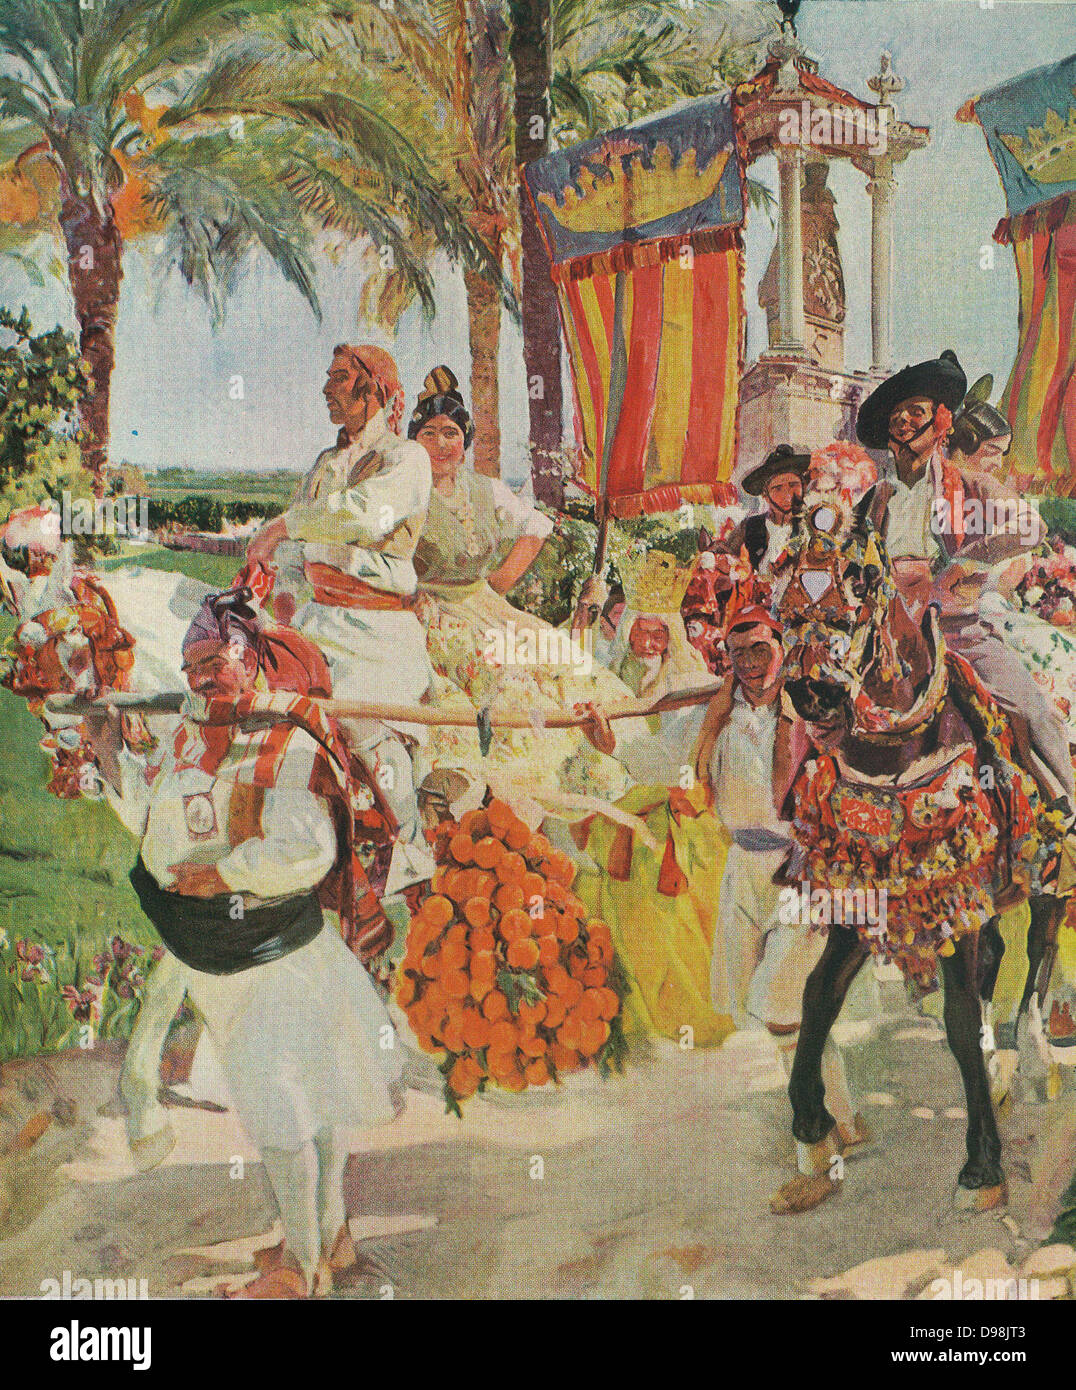 Joaquin Sorolla y Bastida, spanischer Maler (27. Februar 1863 – 10. August 1923). Ein Festival Prozession in Valencia Stockfoto